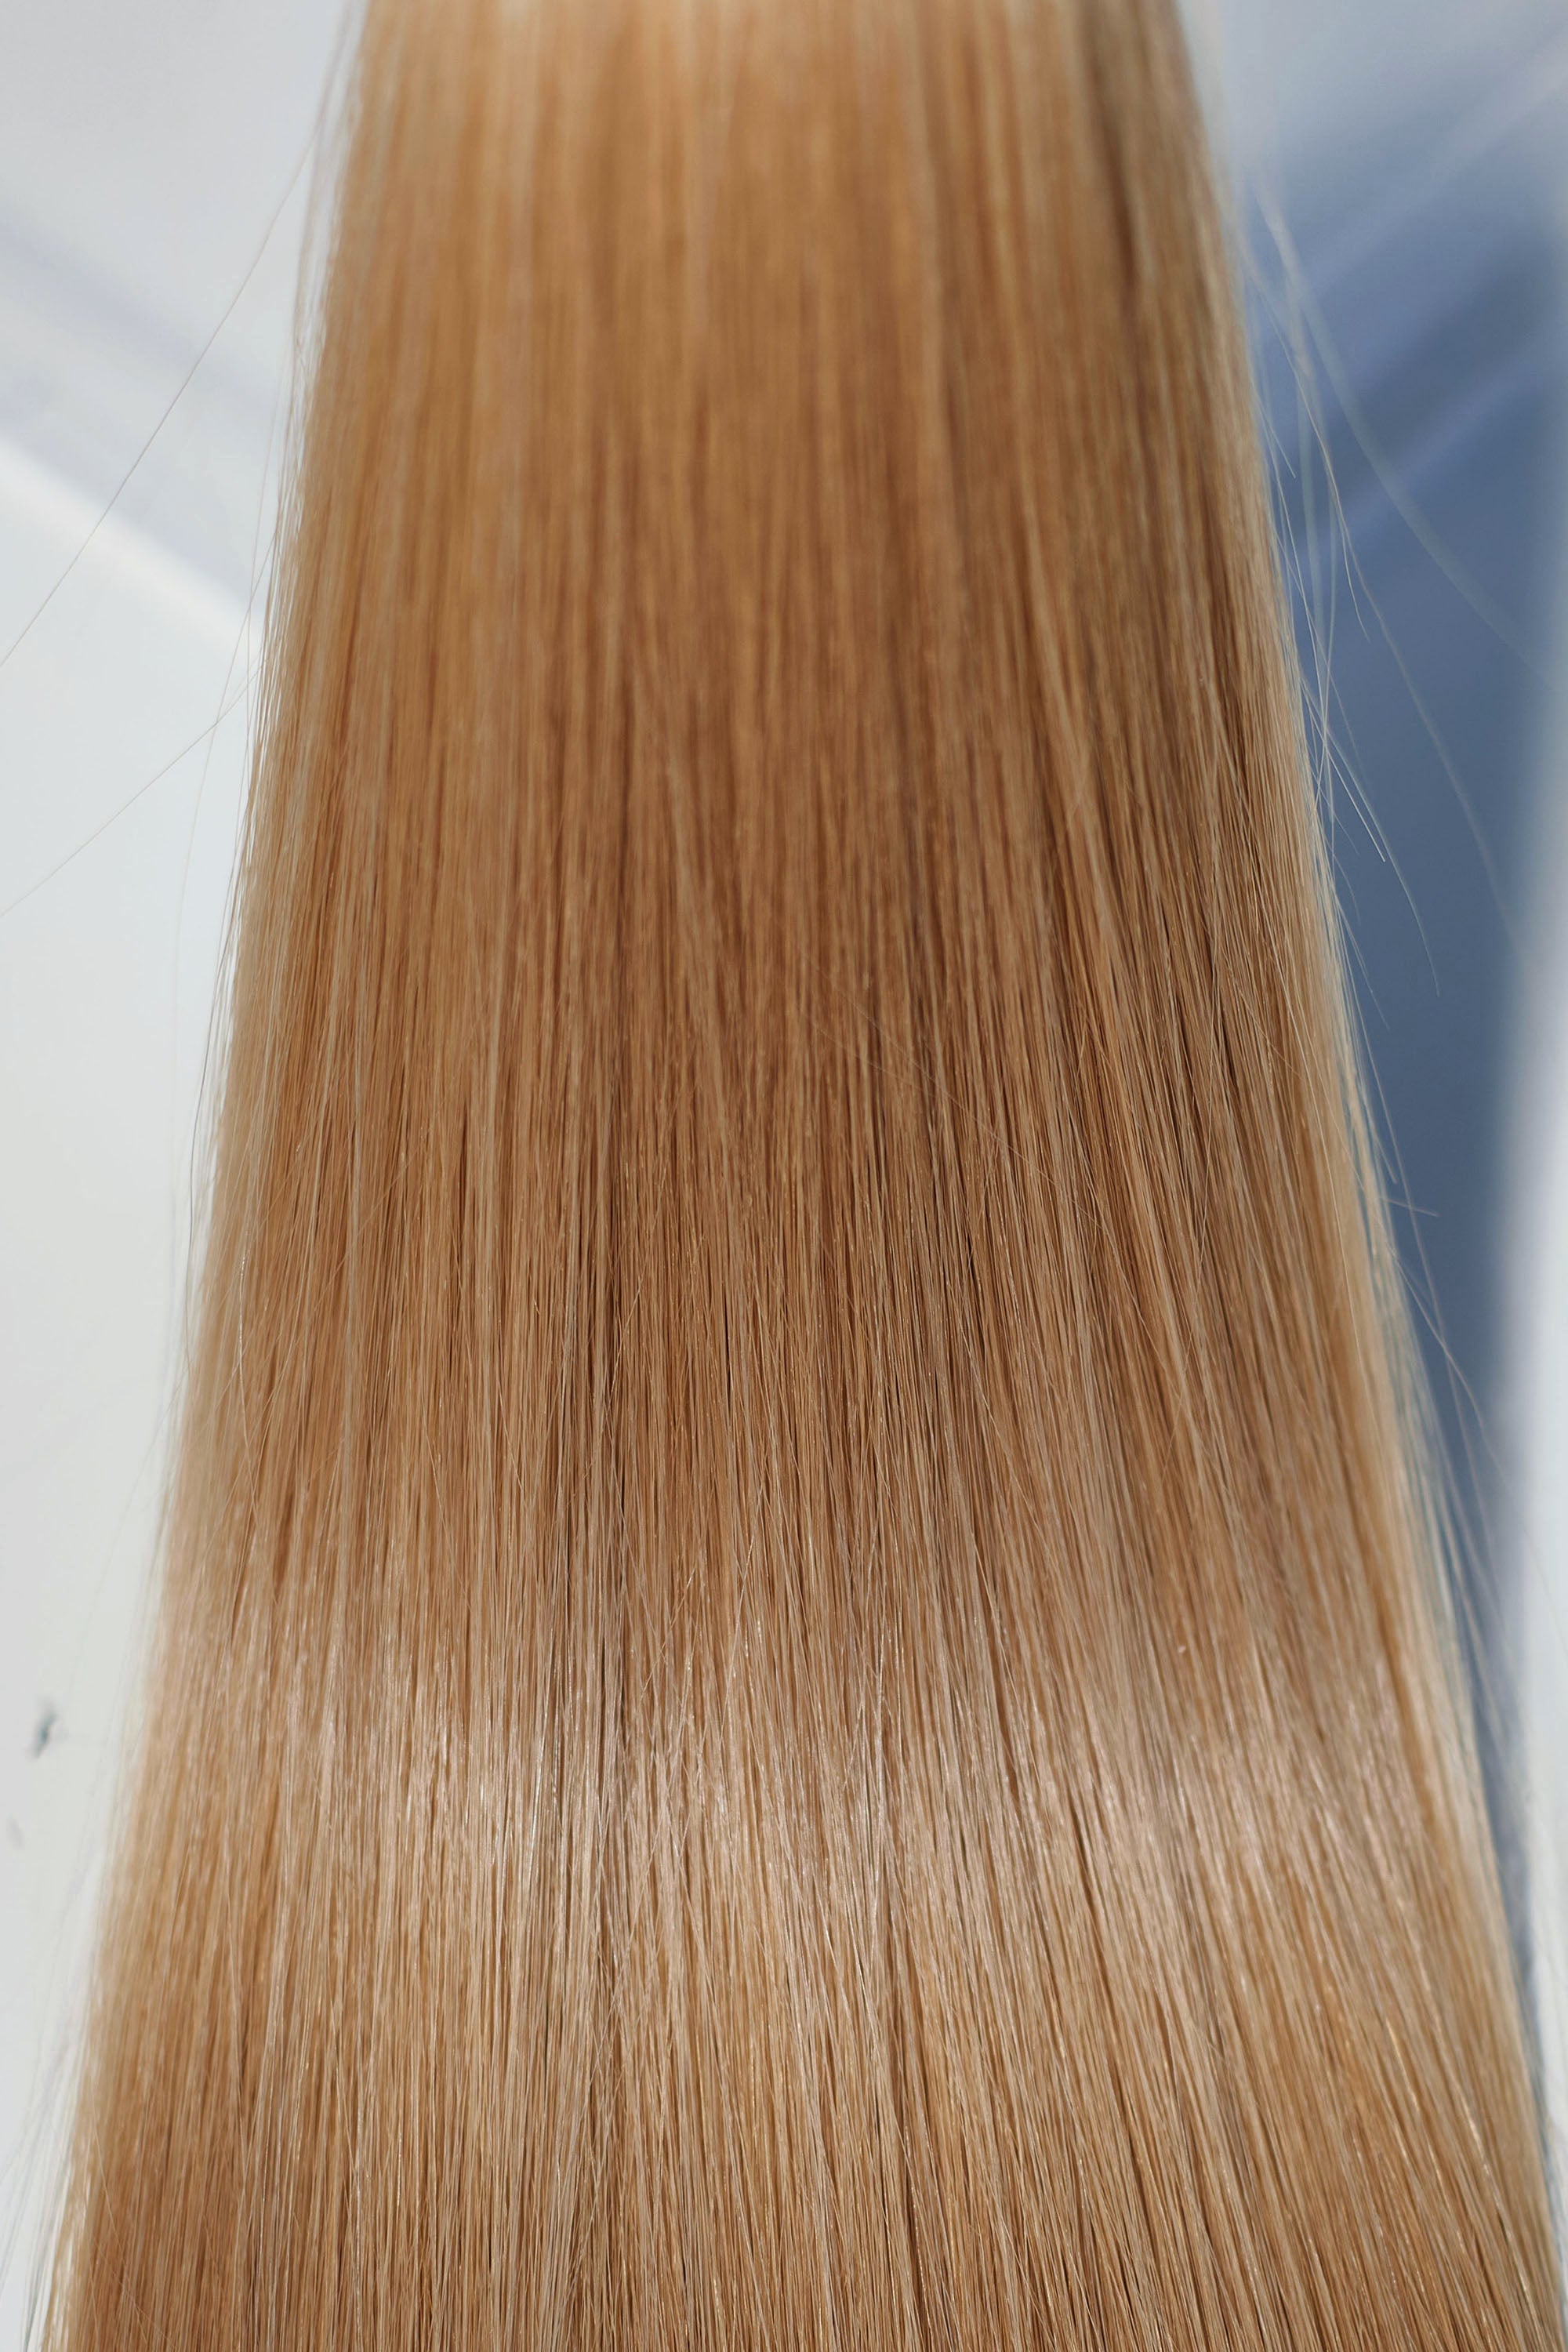 Behair professional Keratin Tip "Premium" 16" (40cm) Natural Straight Gold Sand #18 - 25g (Micro - 0.5g each pcs) hair extensions